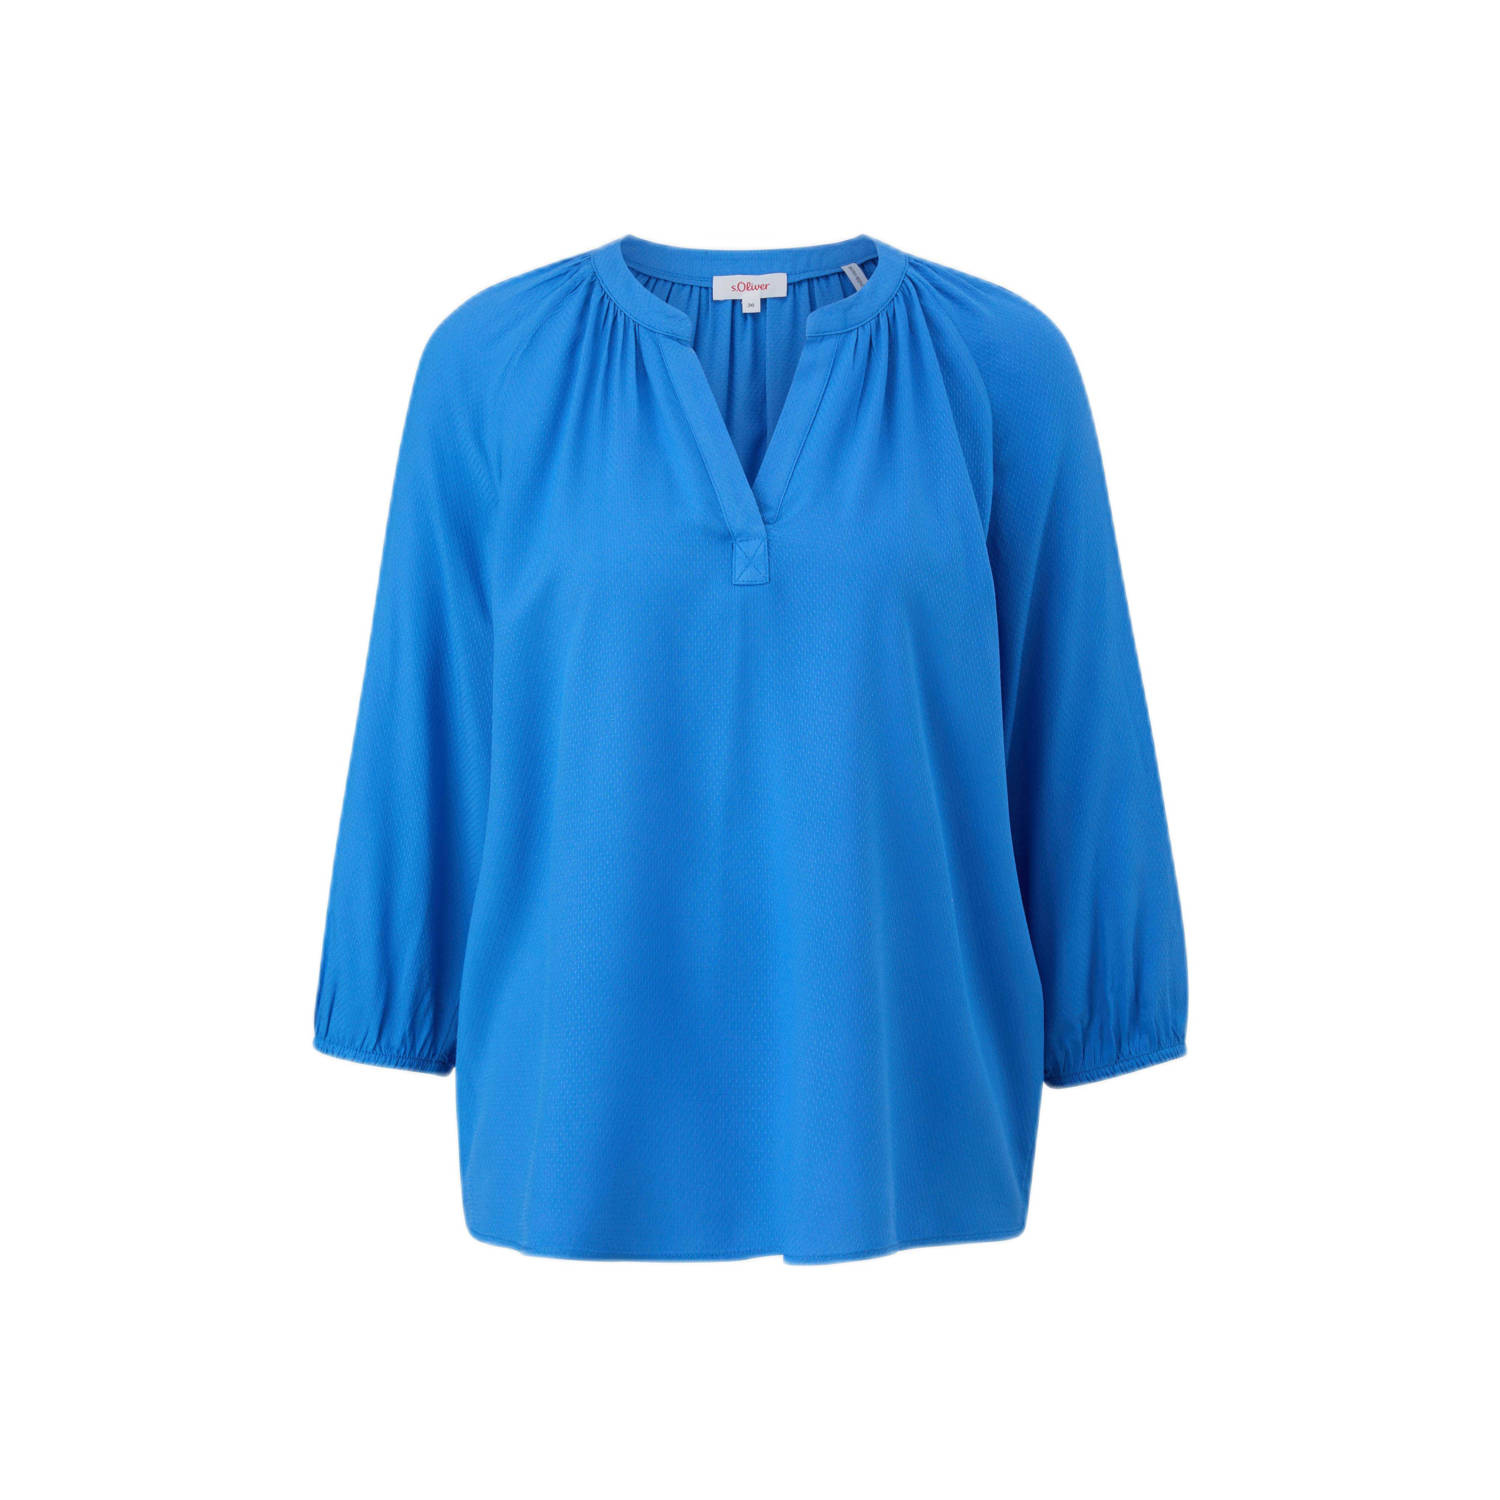 S.Oliver blousetop blauw